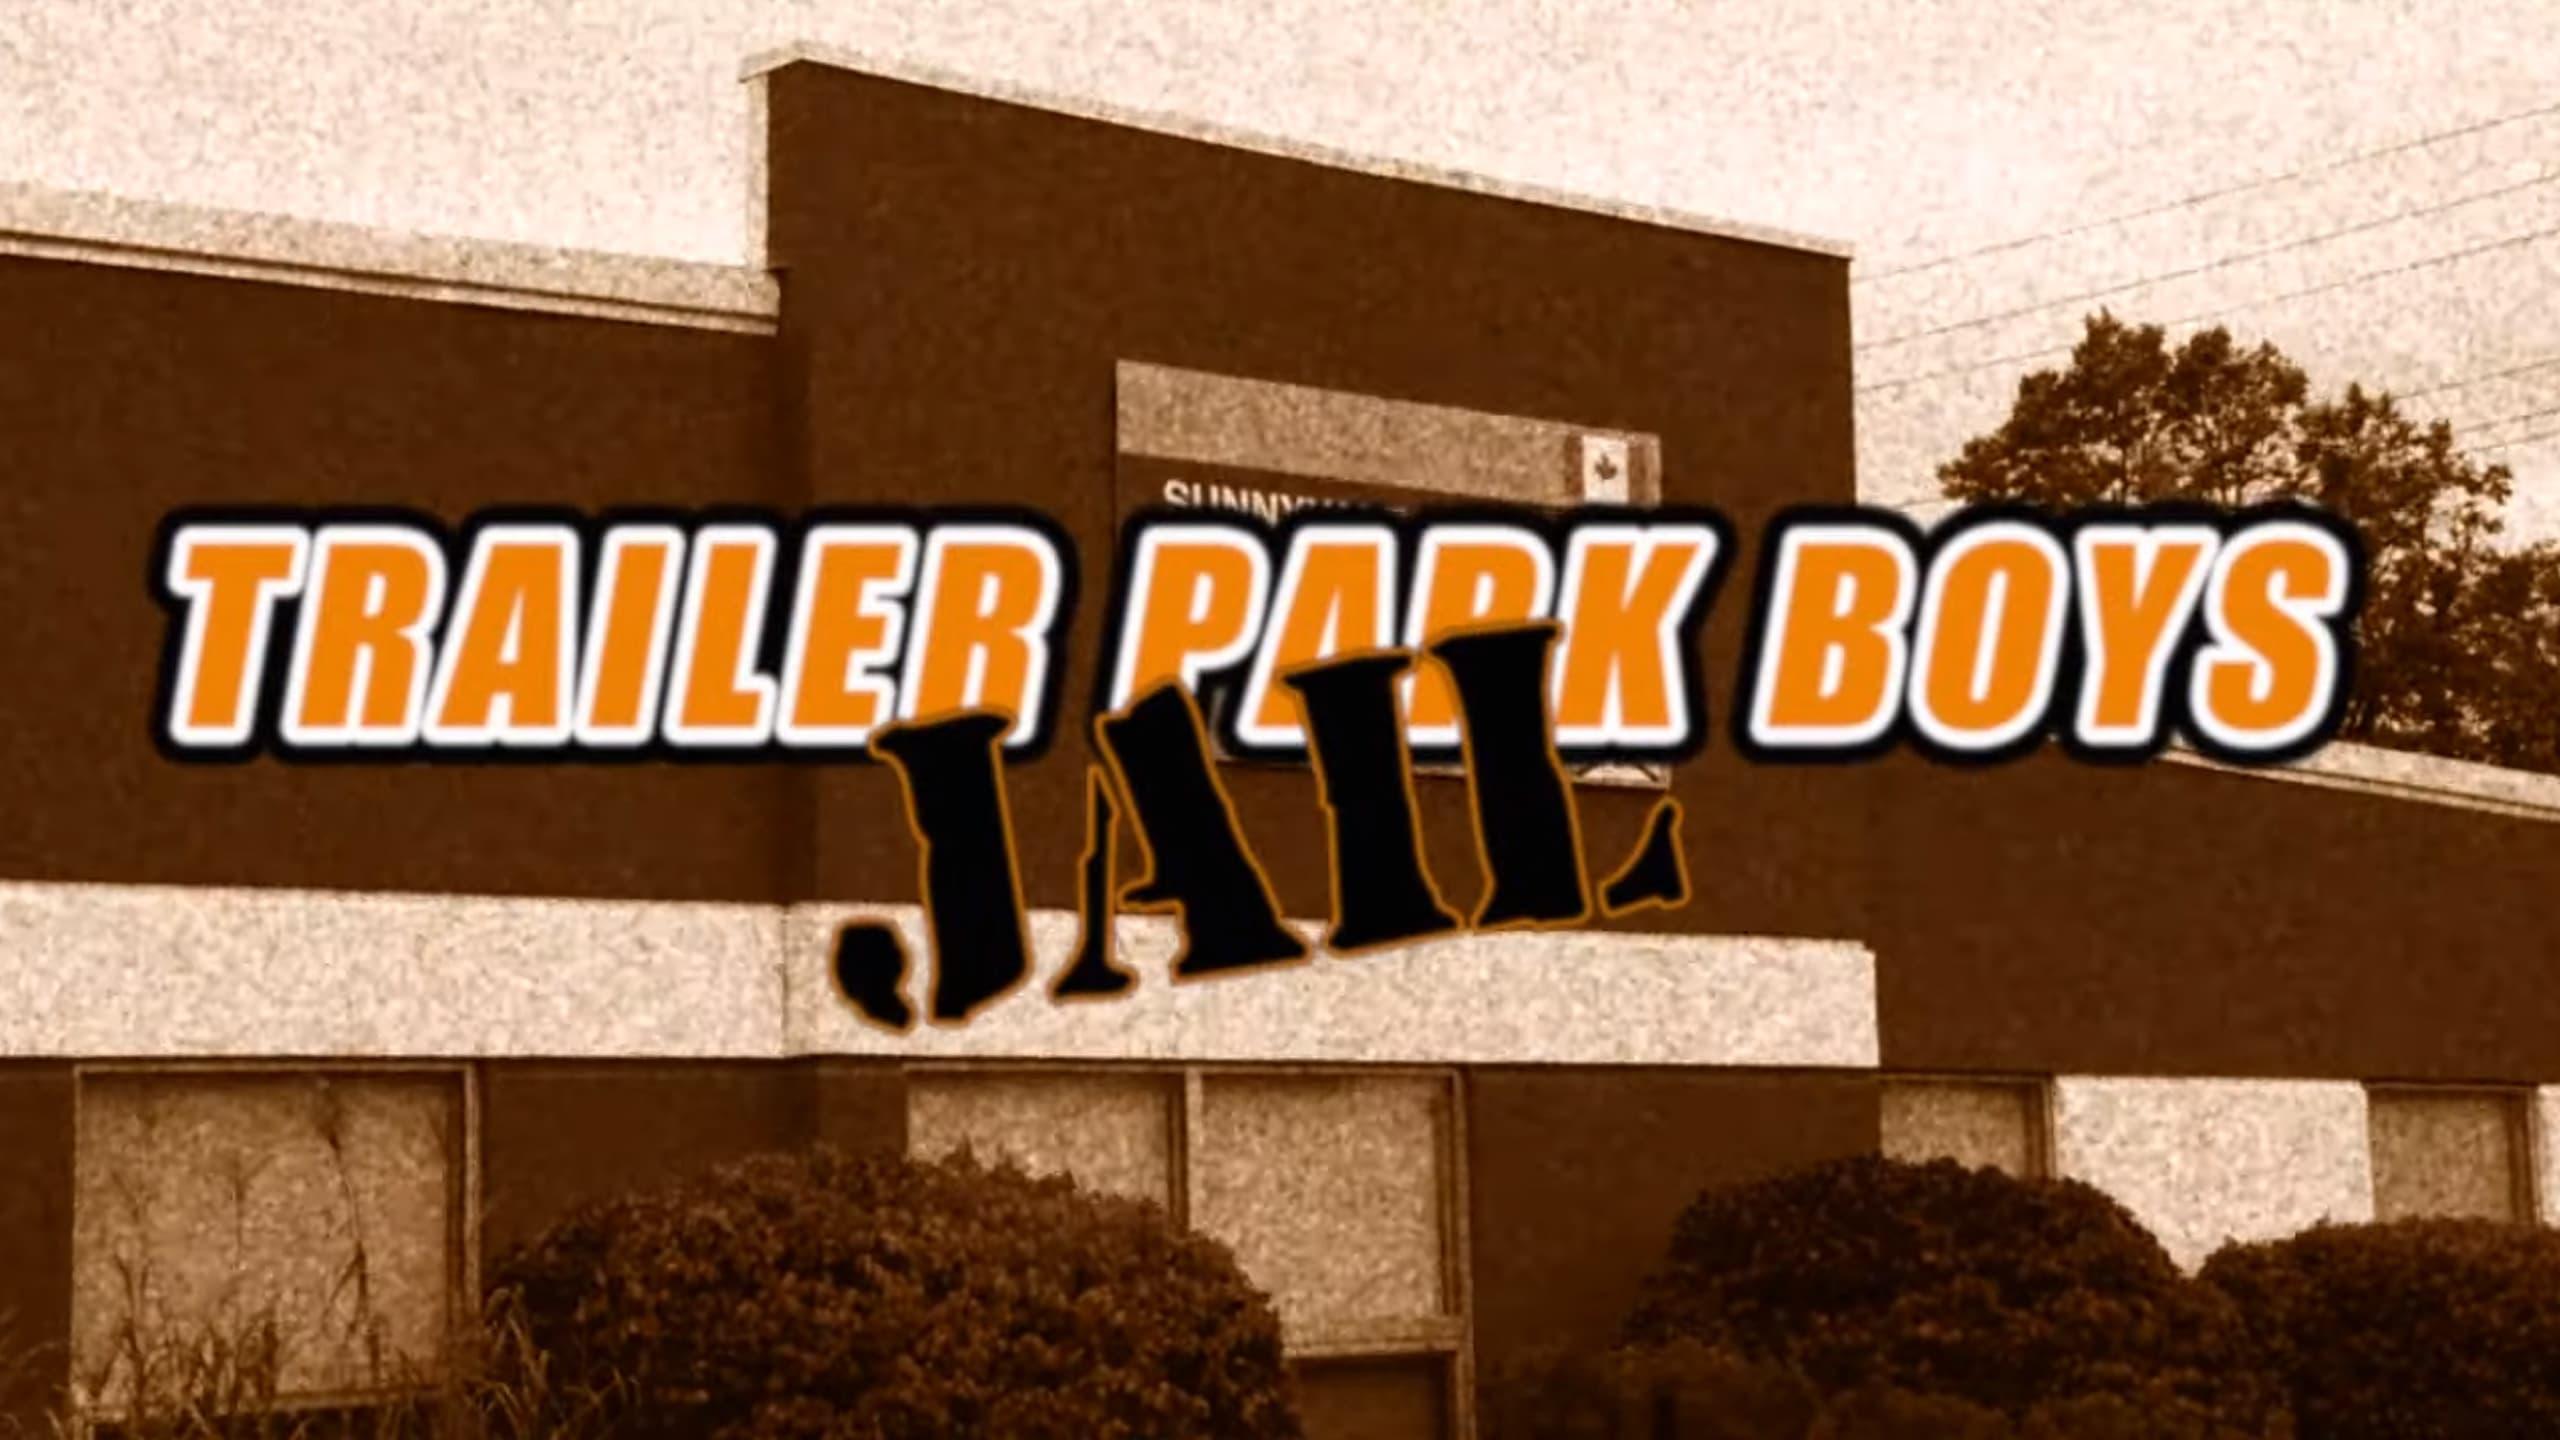 Trailer Park Boys: JAIL backdrop